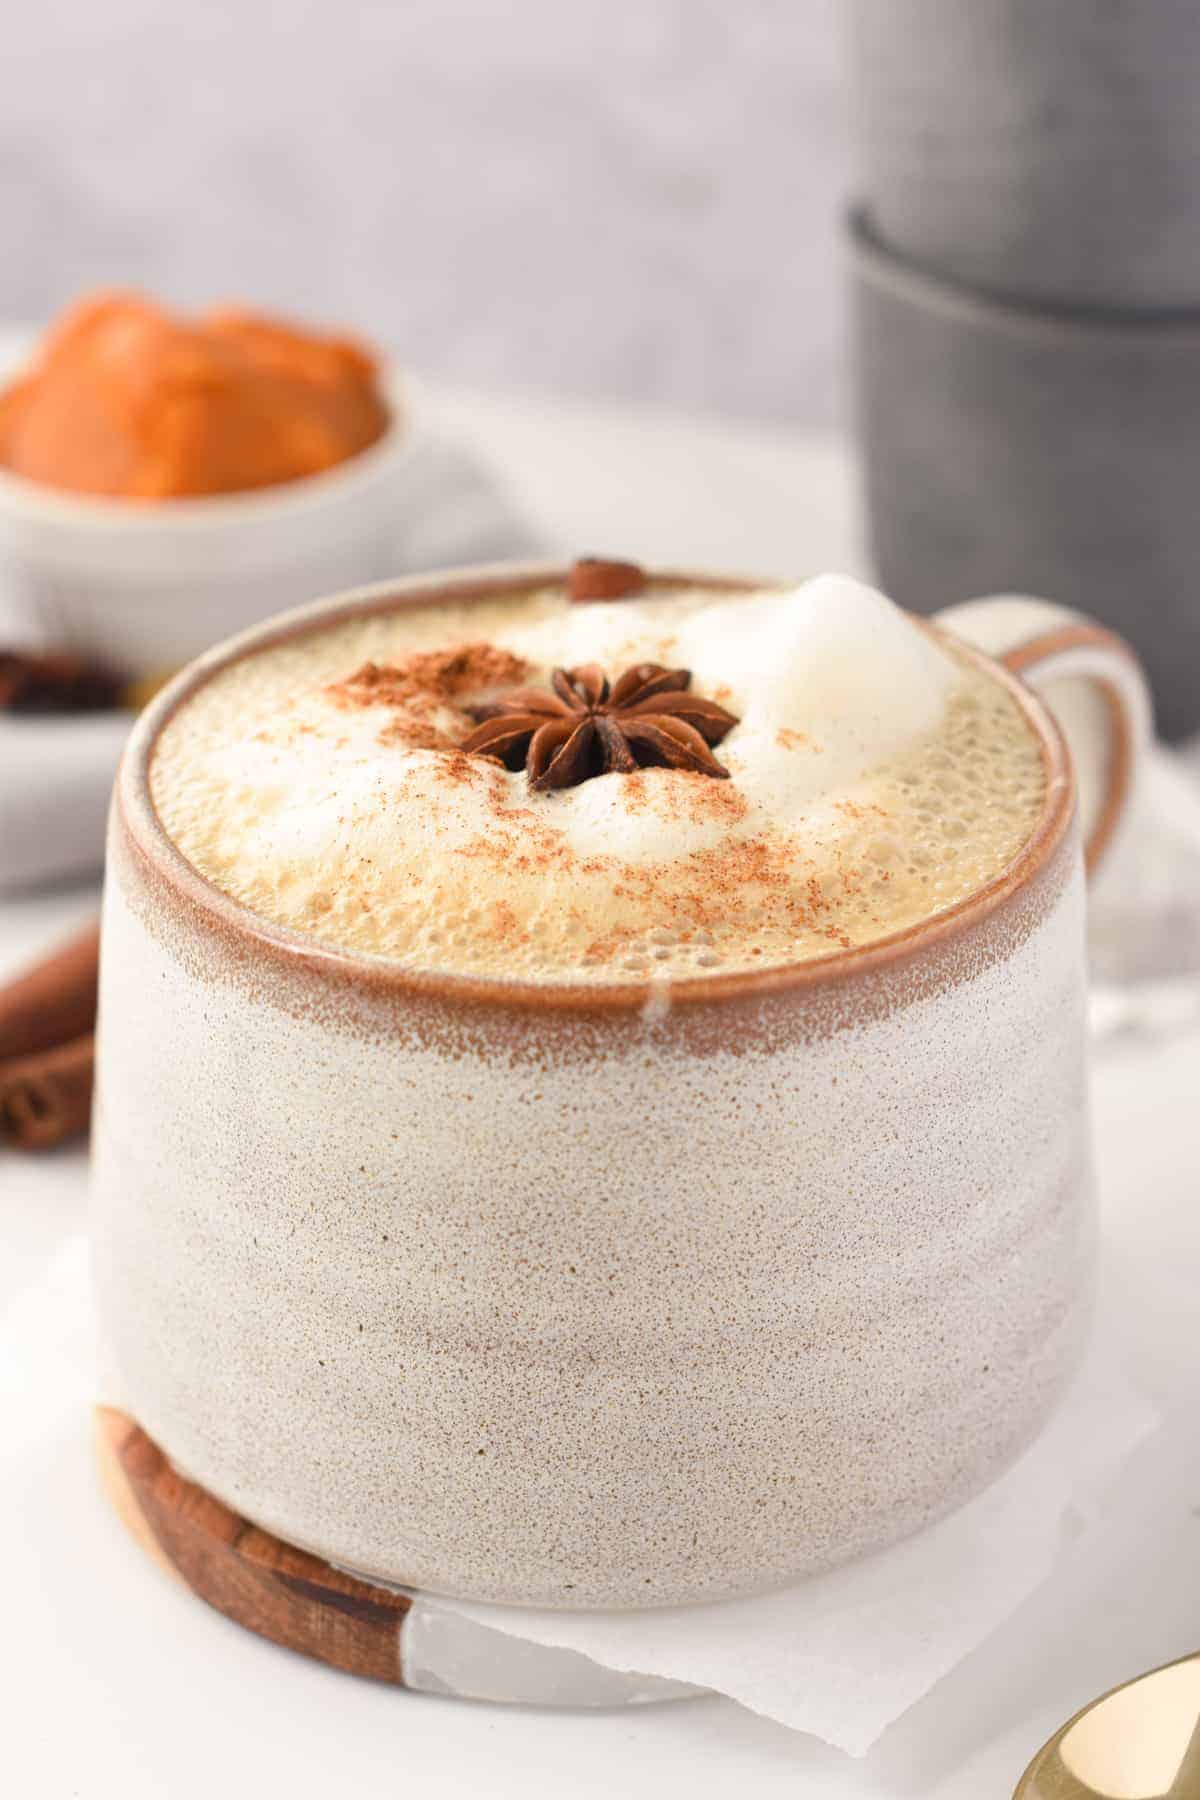 Pumpkin Spiced Chai latte, Instant Mix, 8.40 oz - VAHDAM® USA